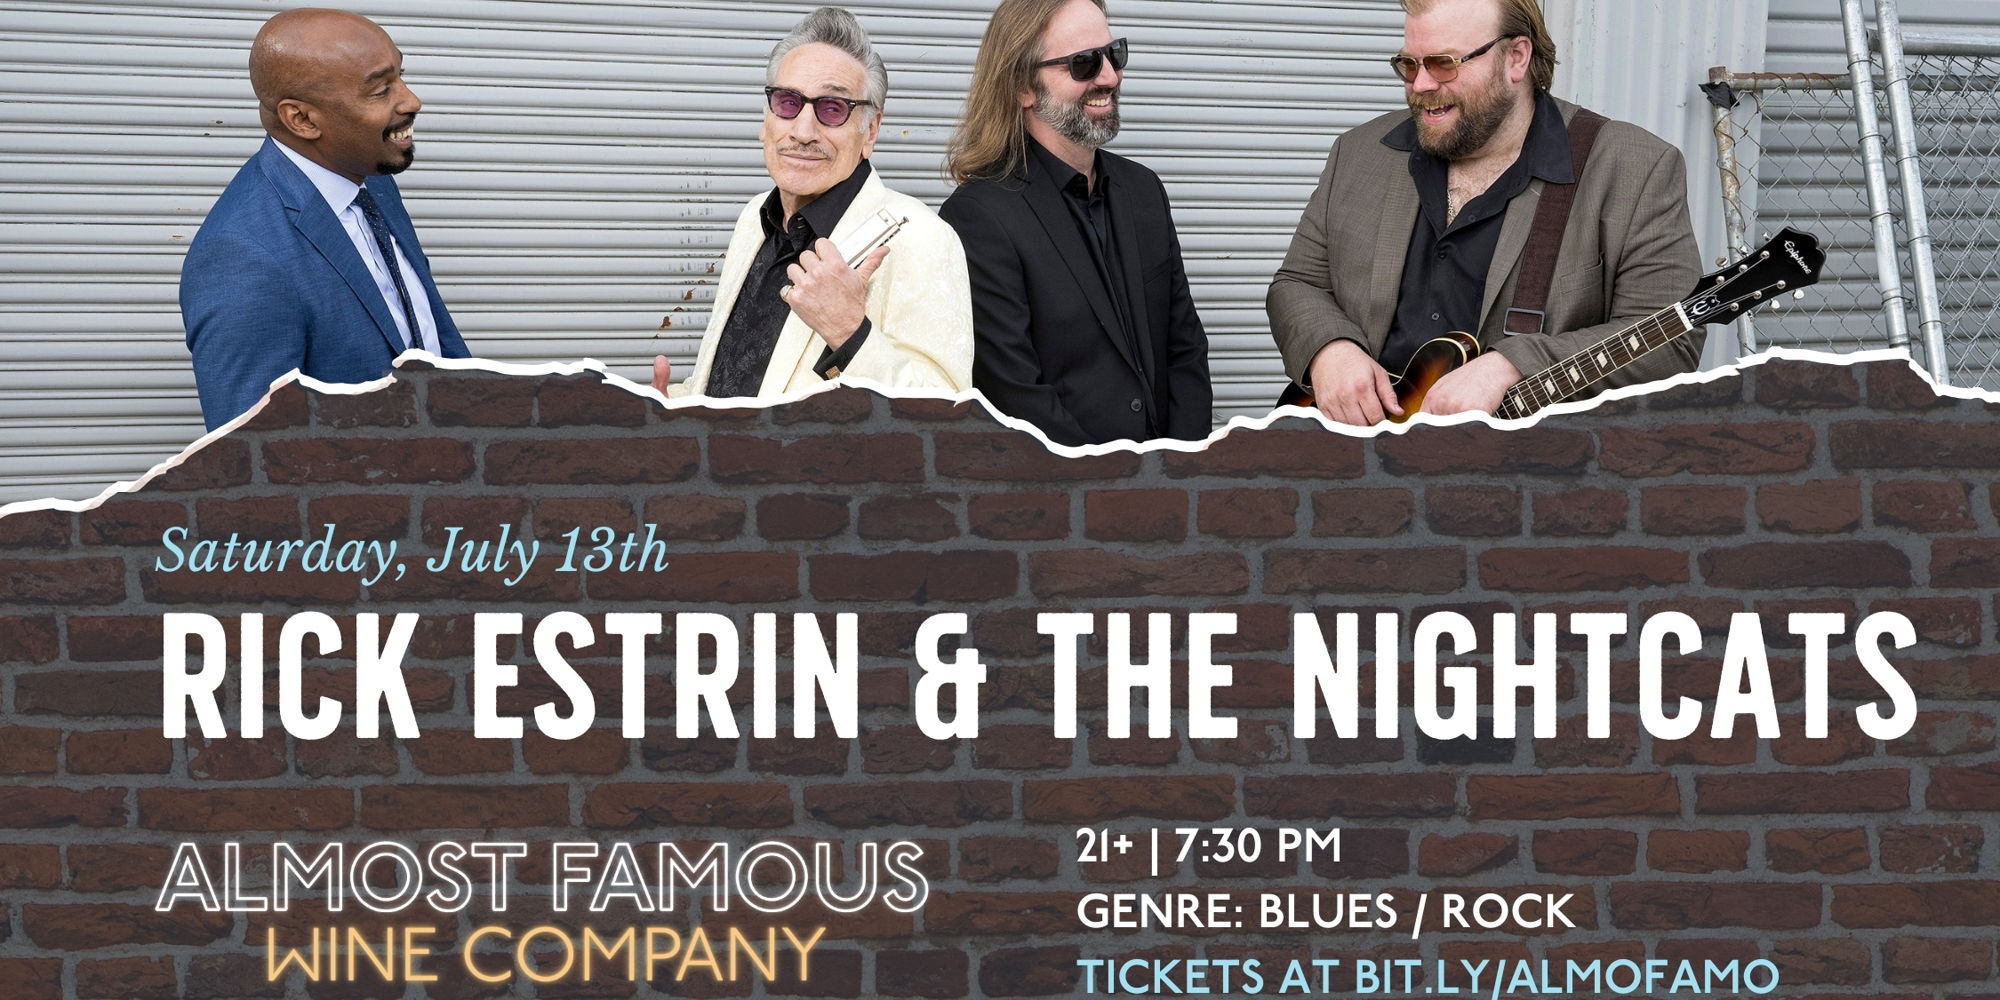 Wildly entertaining, award-winning blues band Rick Estrin & The Nightcats promotional image